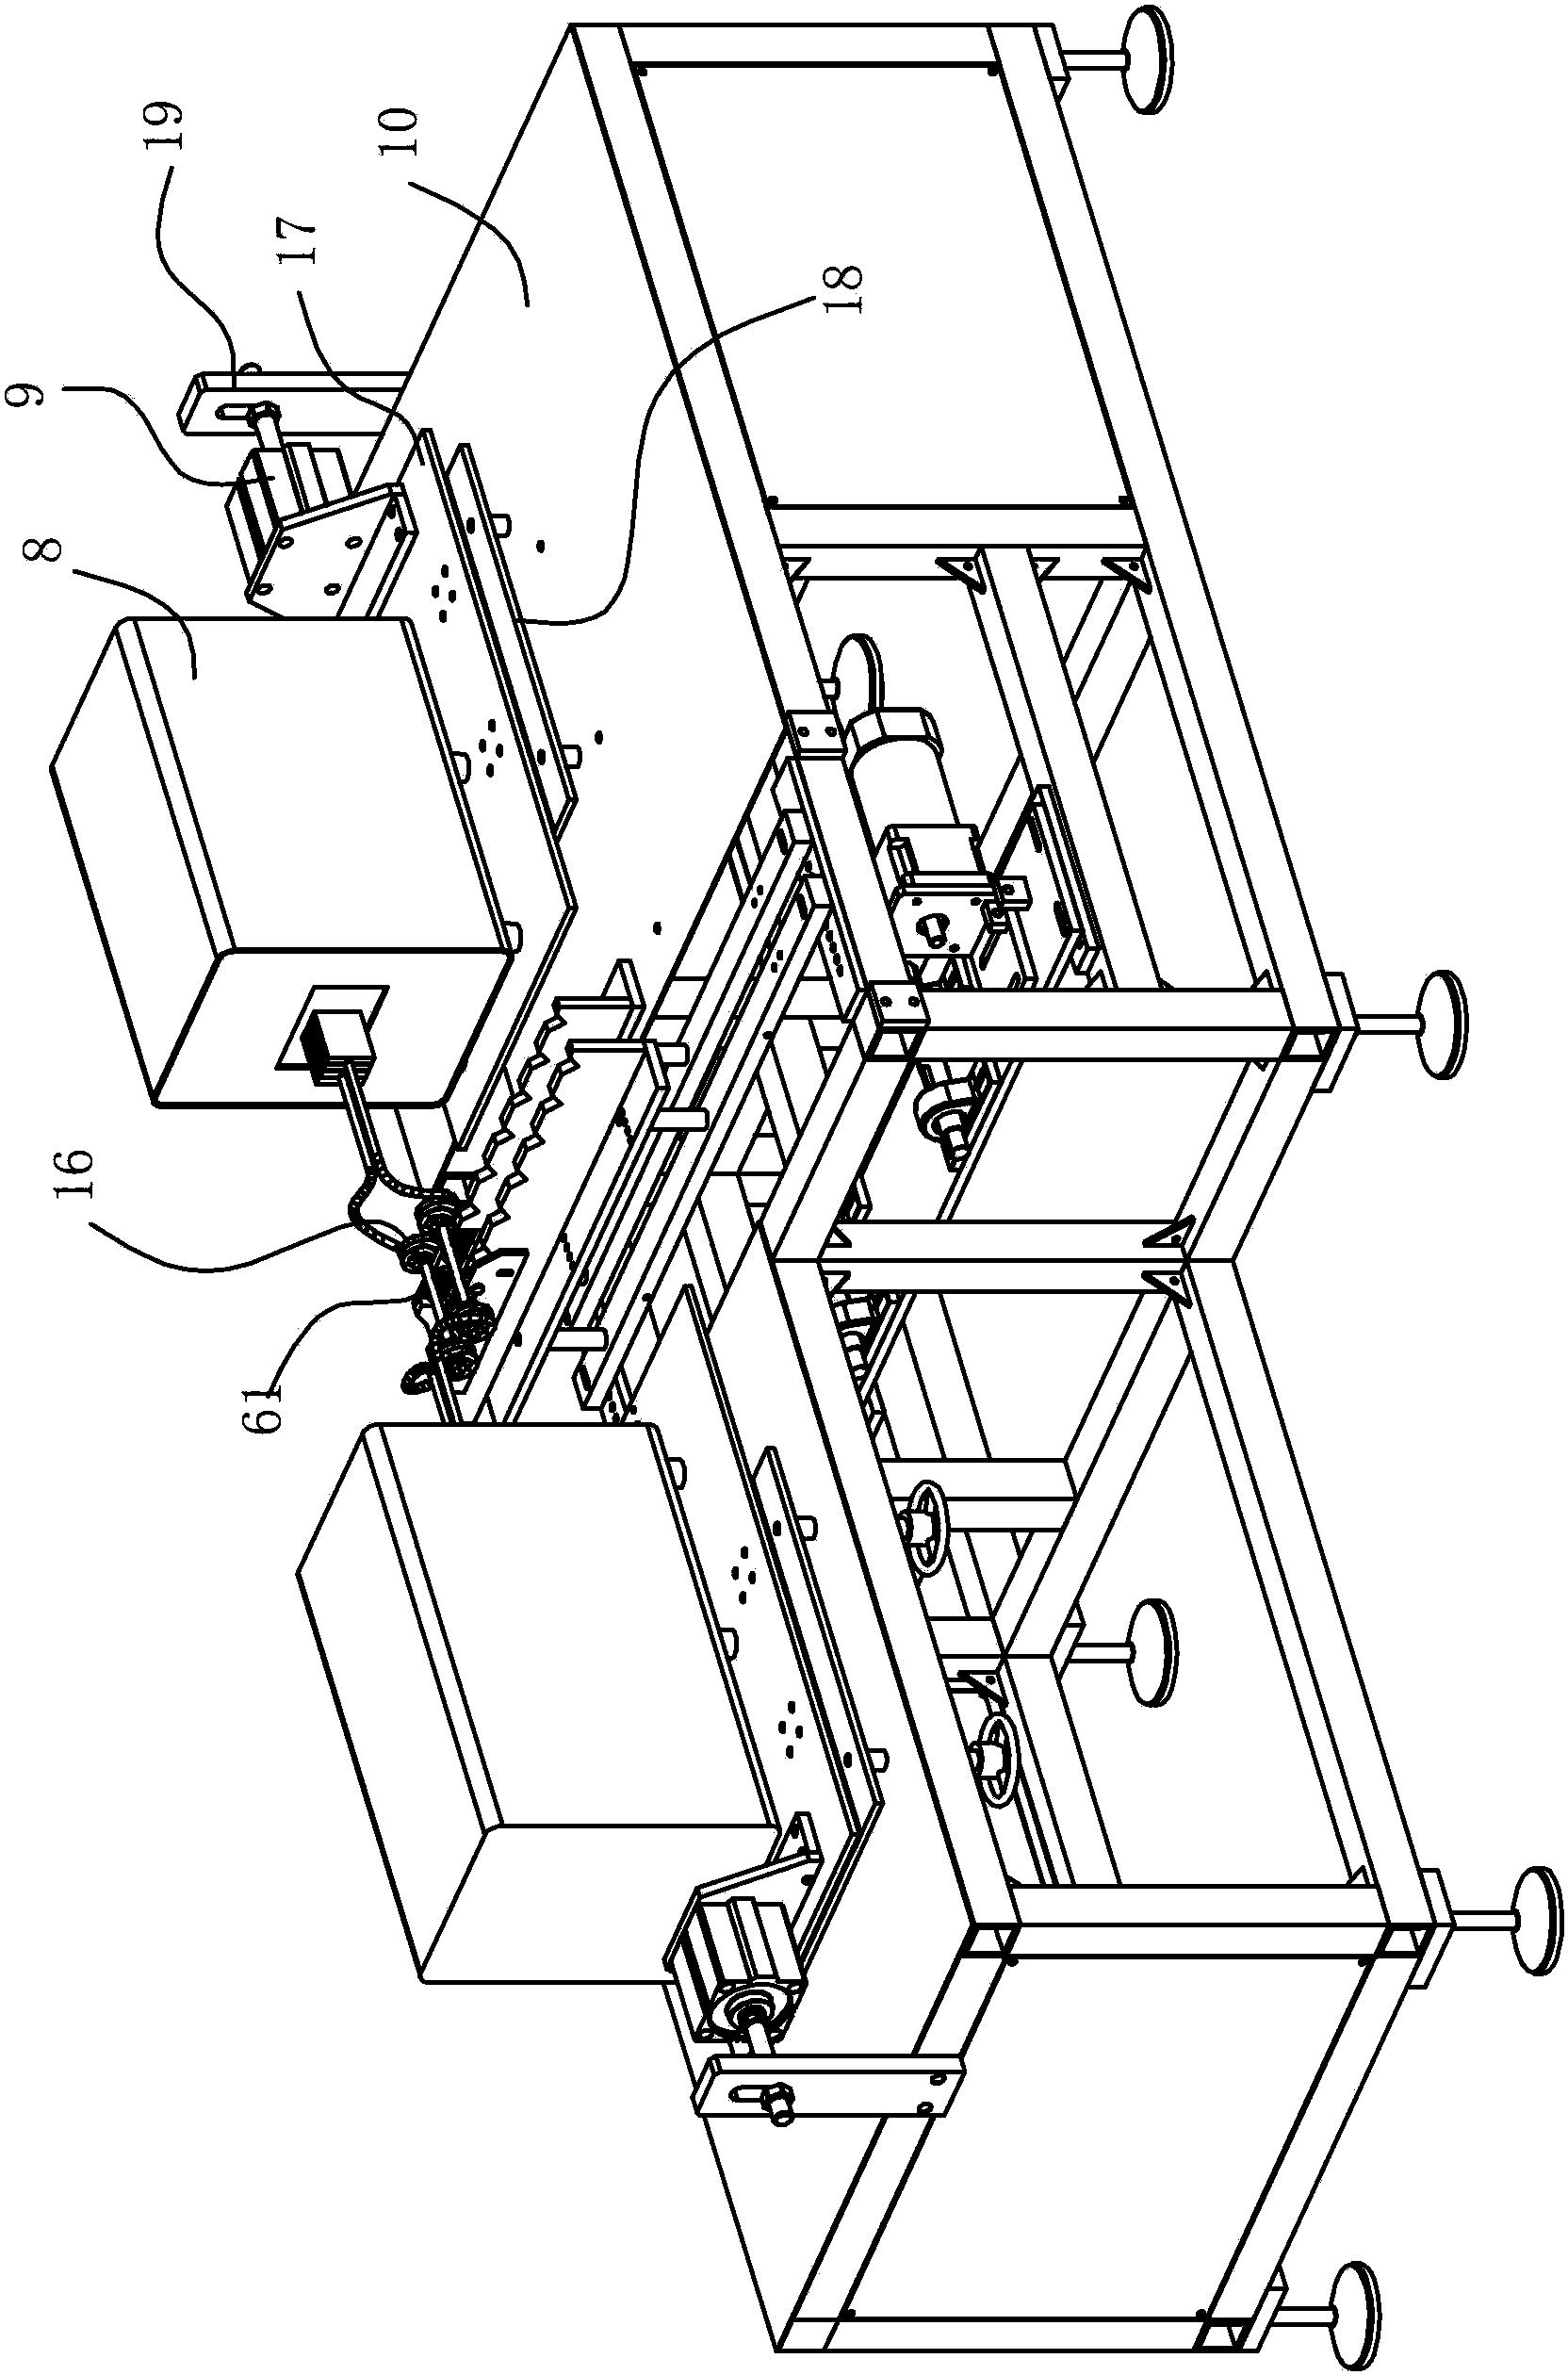 Motor shaft quenching equipment